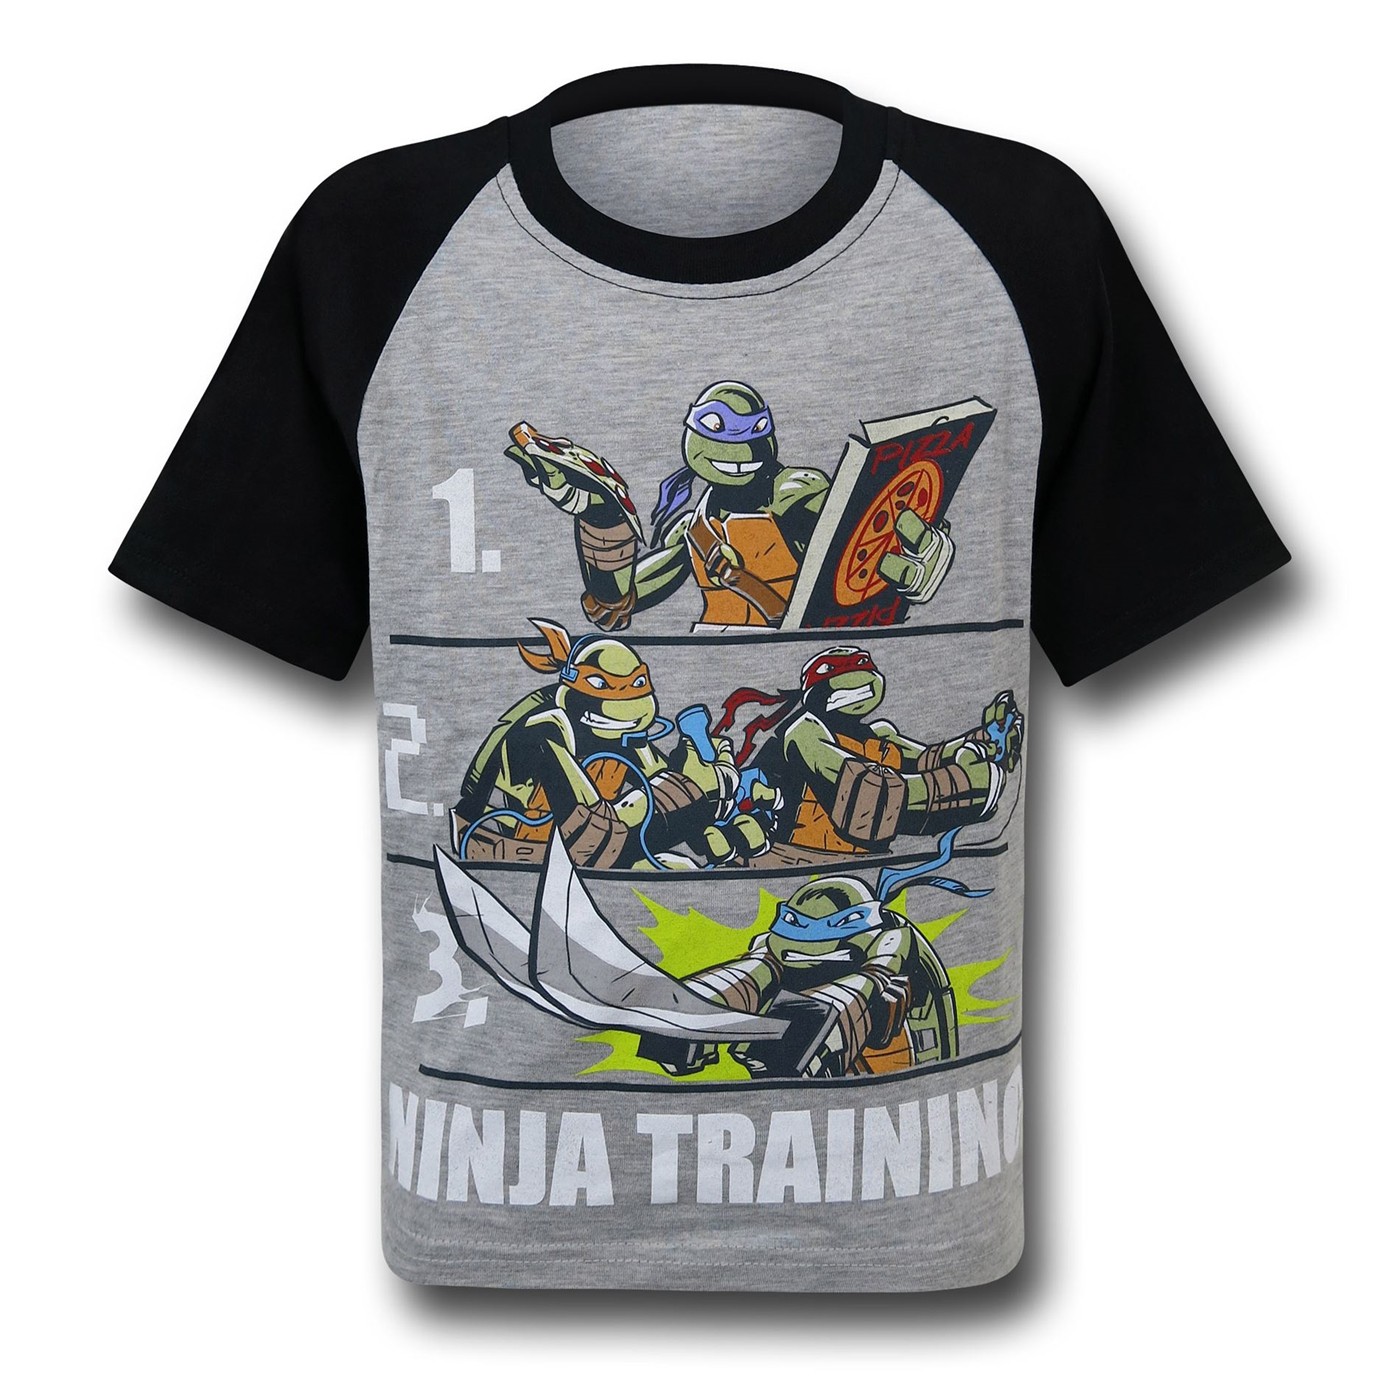 TMNT Ninja Training Kids T-Shirt